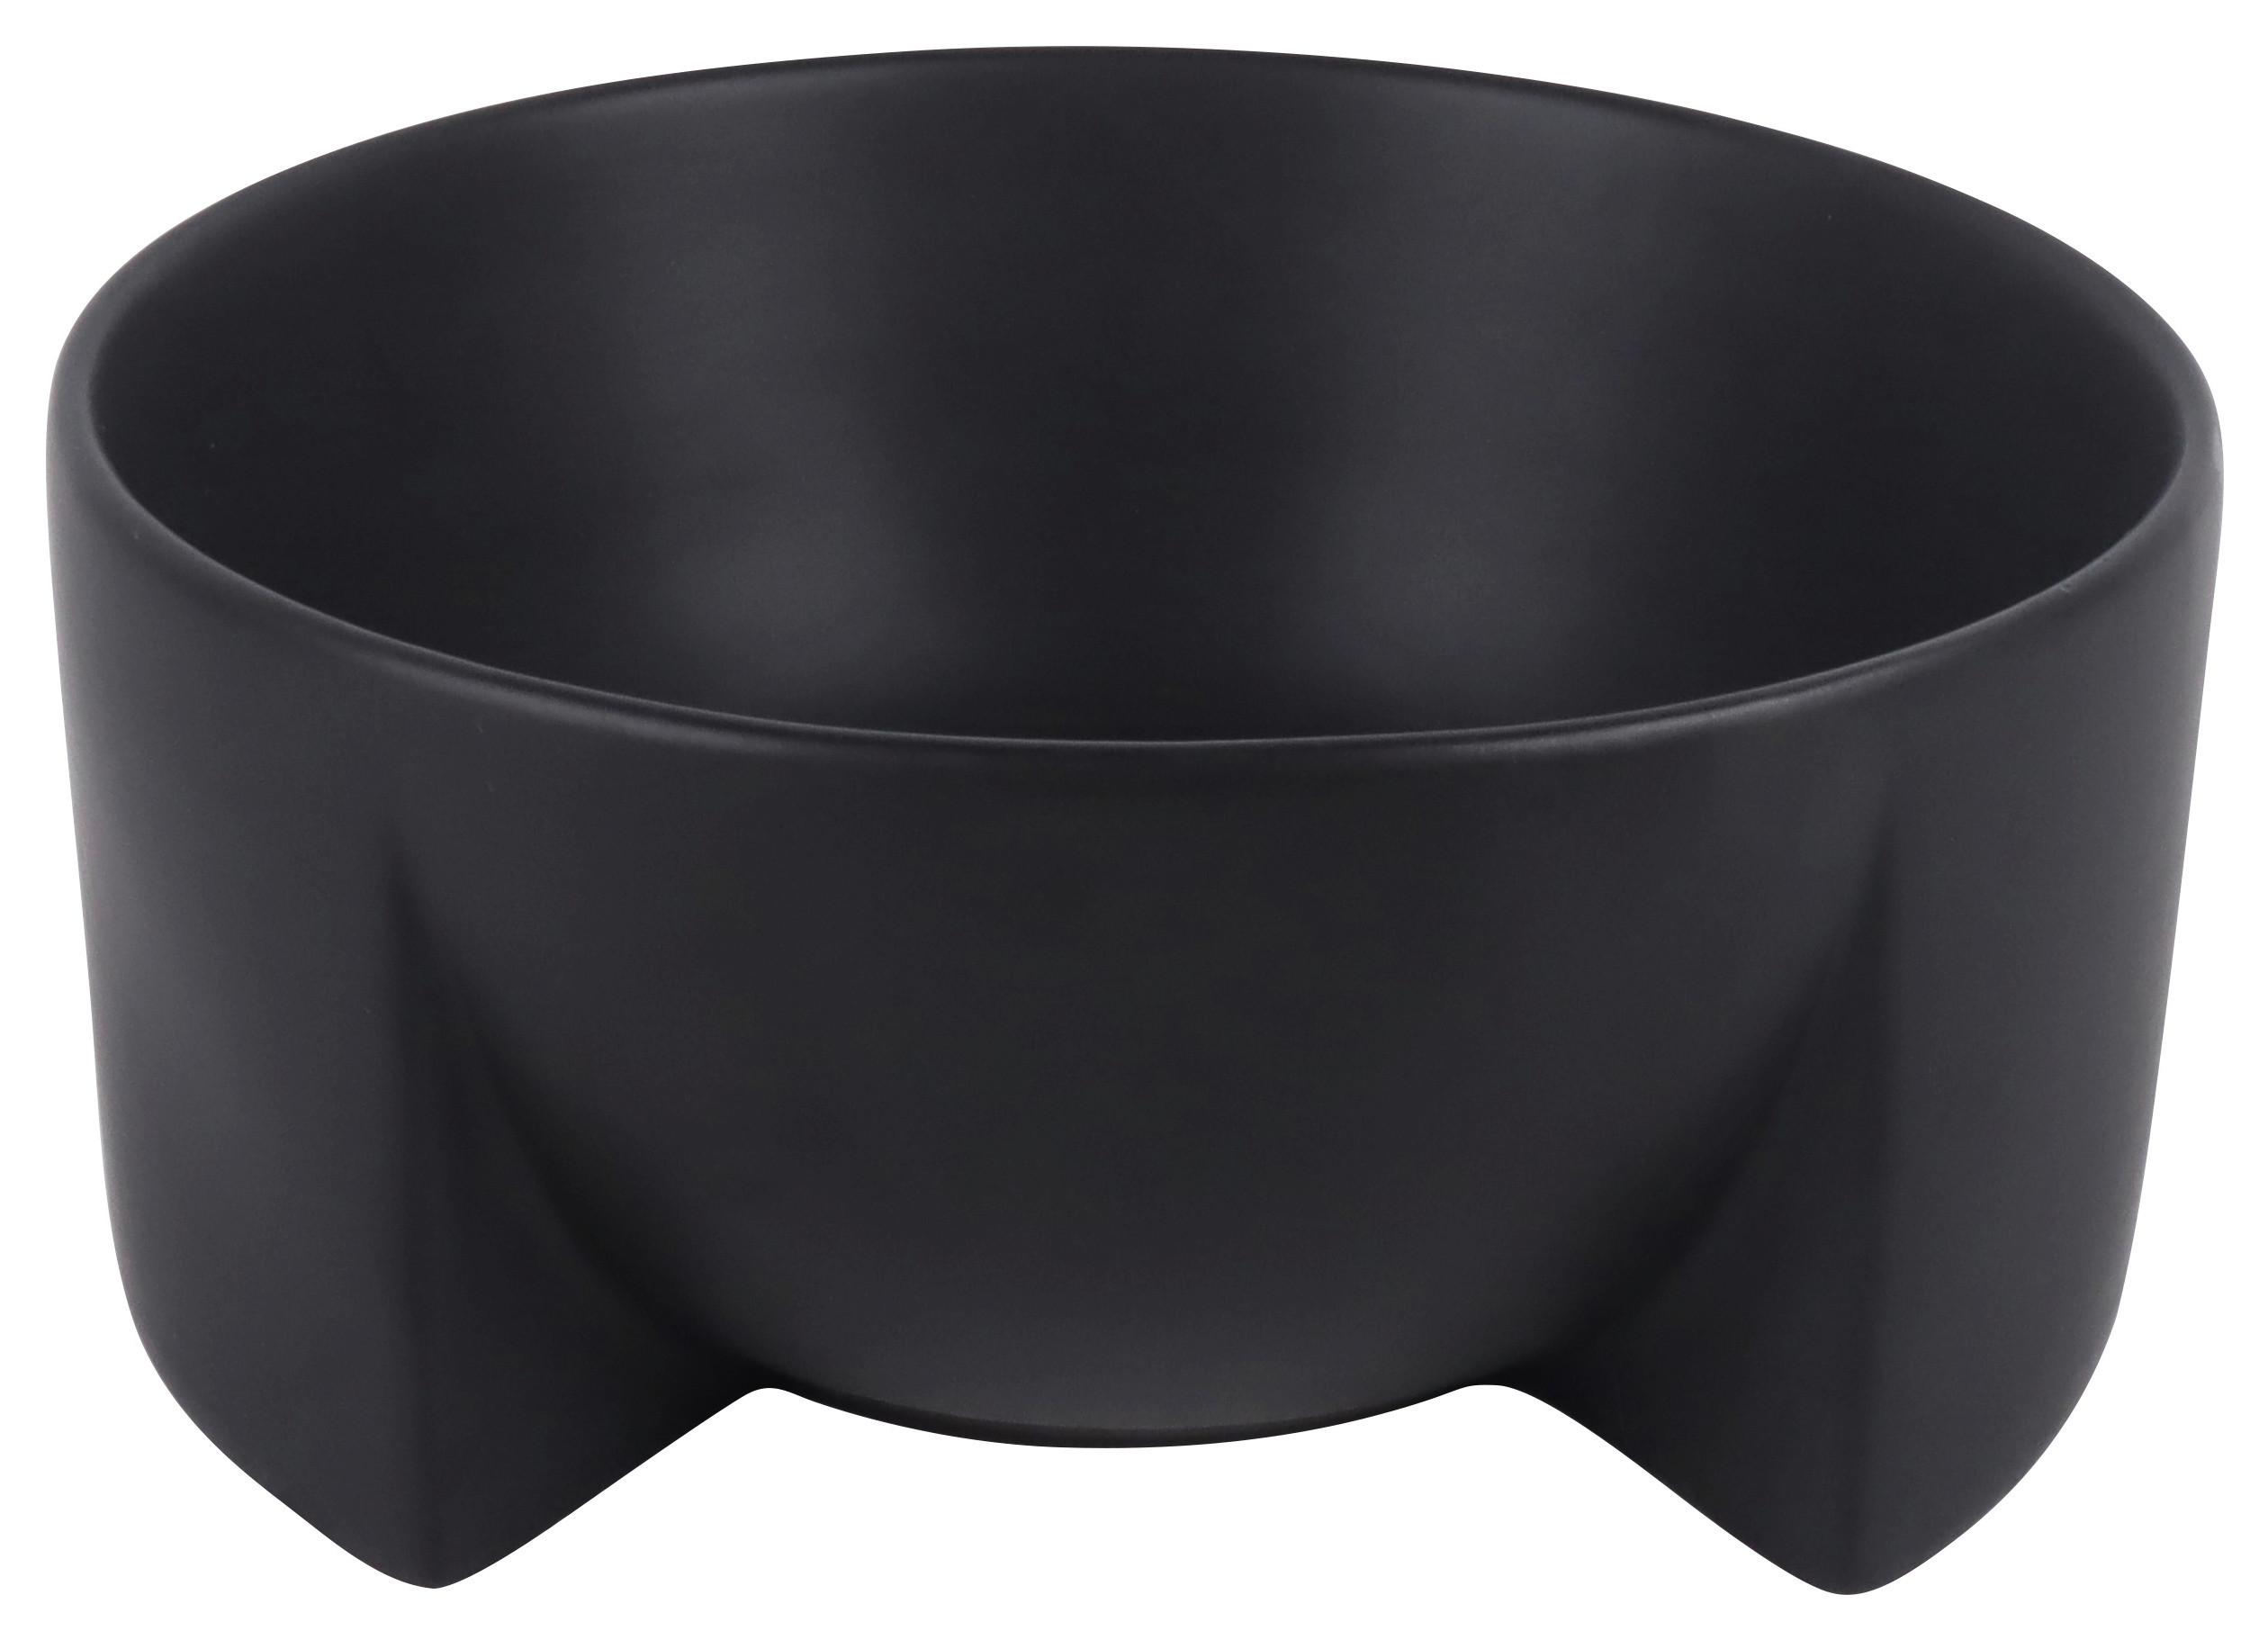 Dekorační Miska Mode, Ø: 18,5cm - černá, Moderní, keramika (18,5/8,5cm) - Modern Living